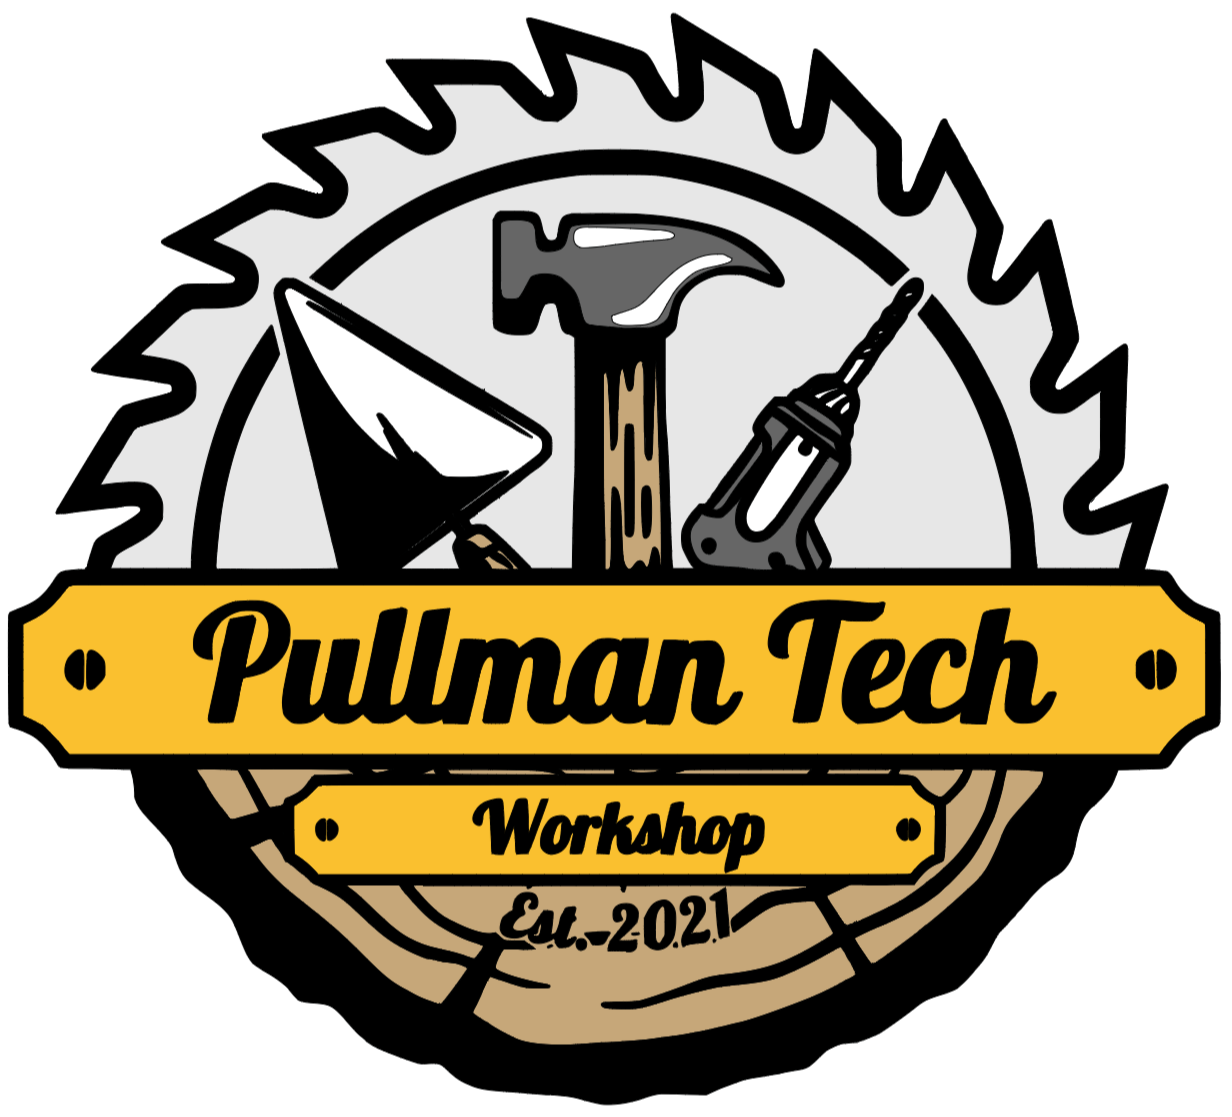 Pullman Tech Workshop logo